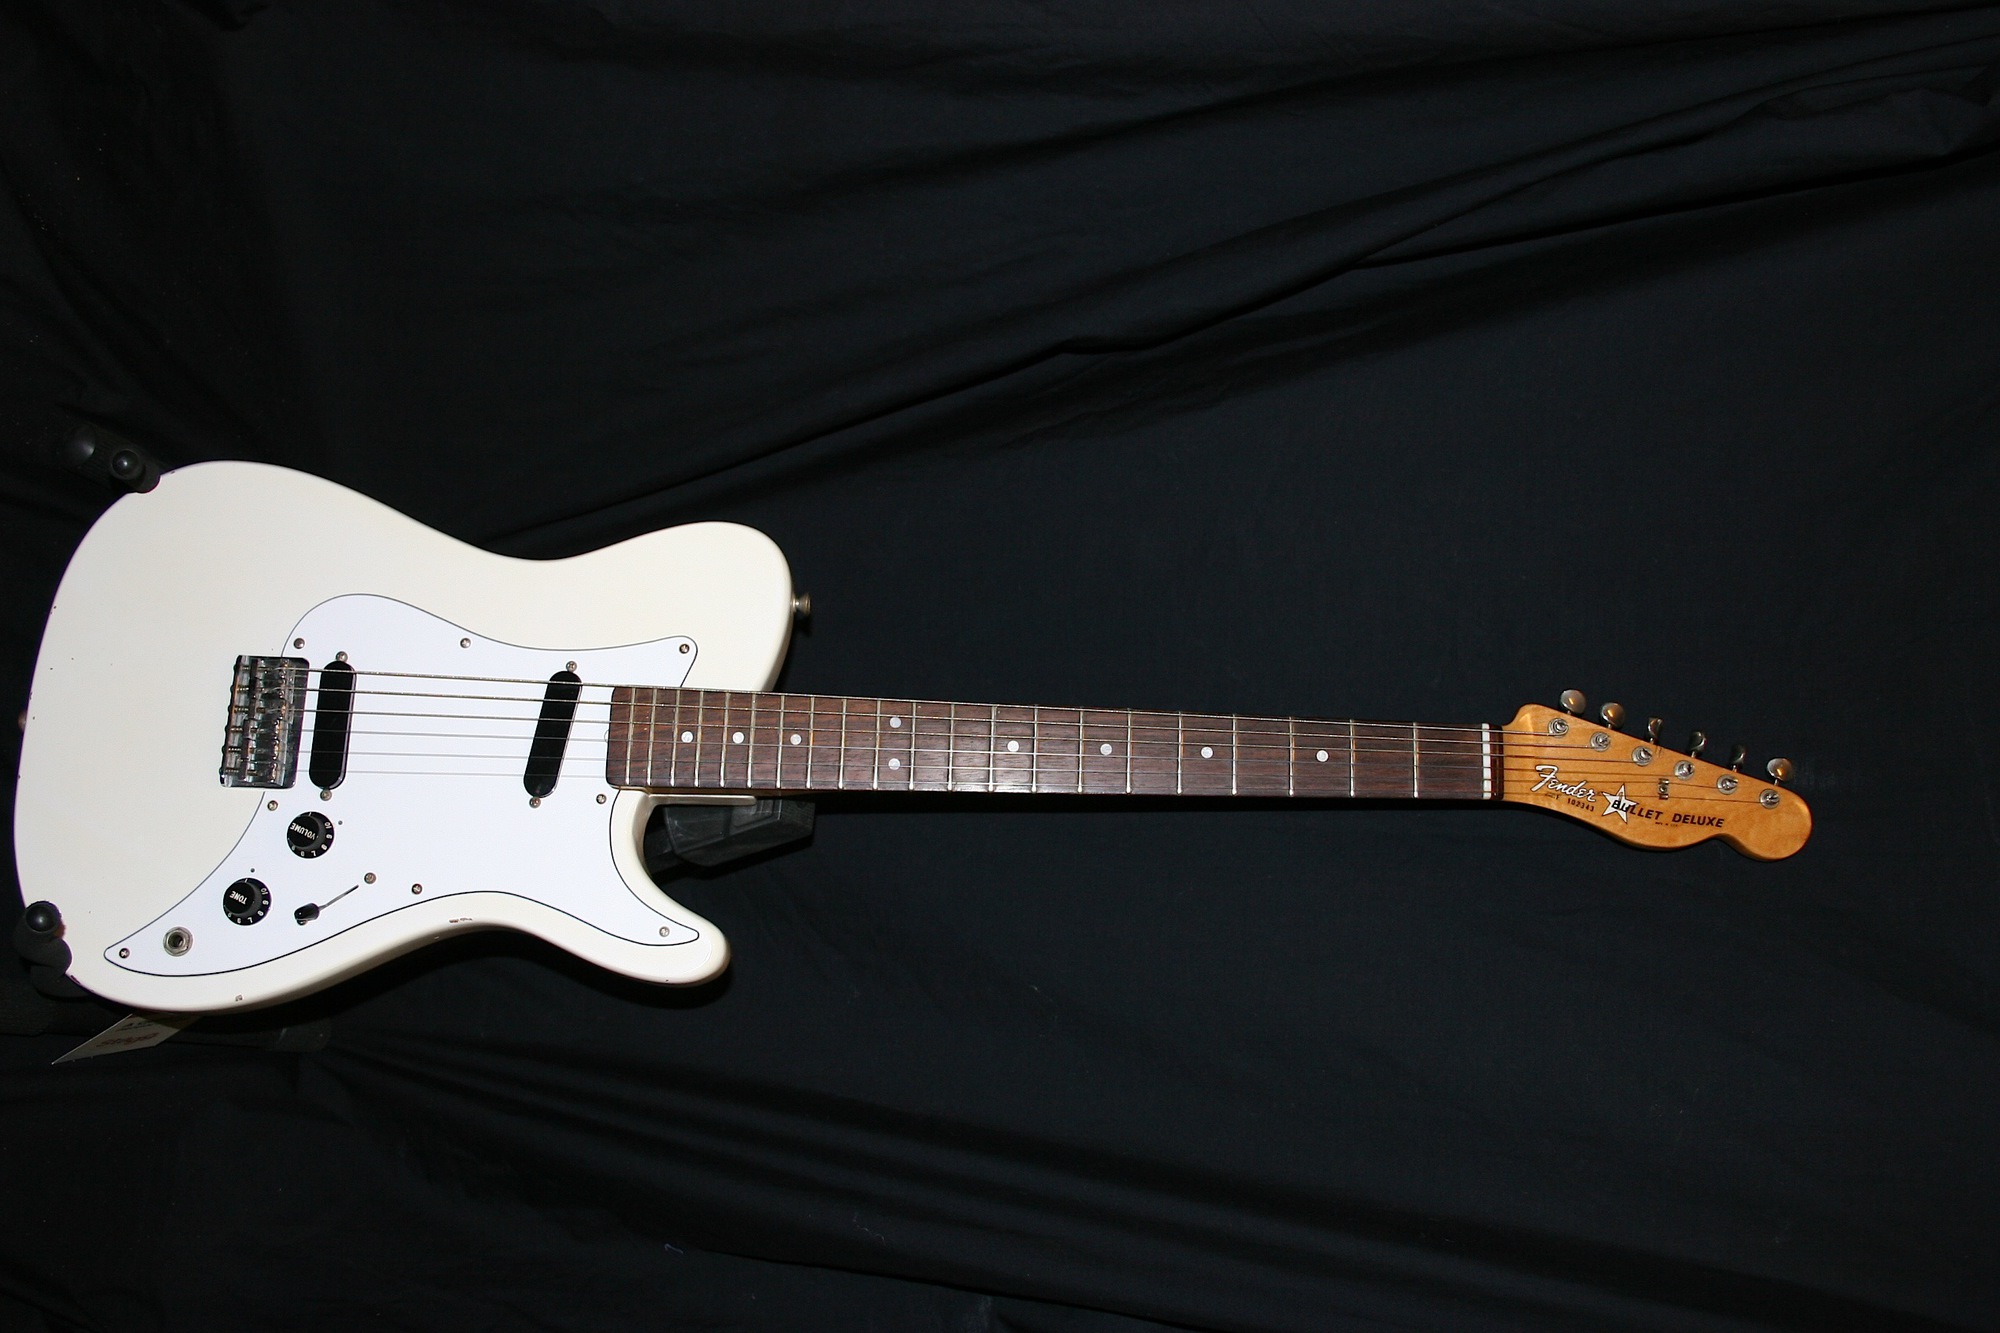 Fender 1981 Bullet Deluxe USA rare! - Amp Guitars, Macclesfield